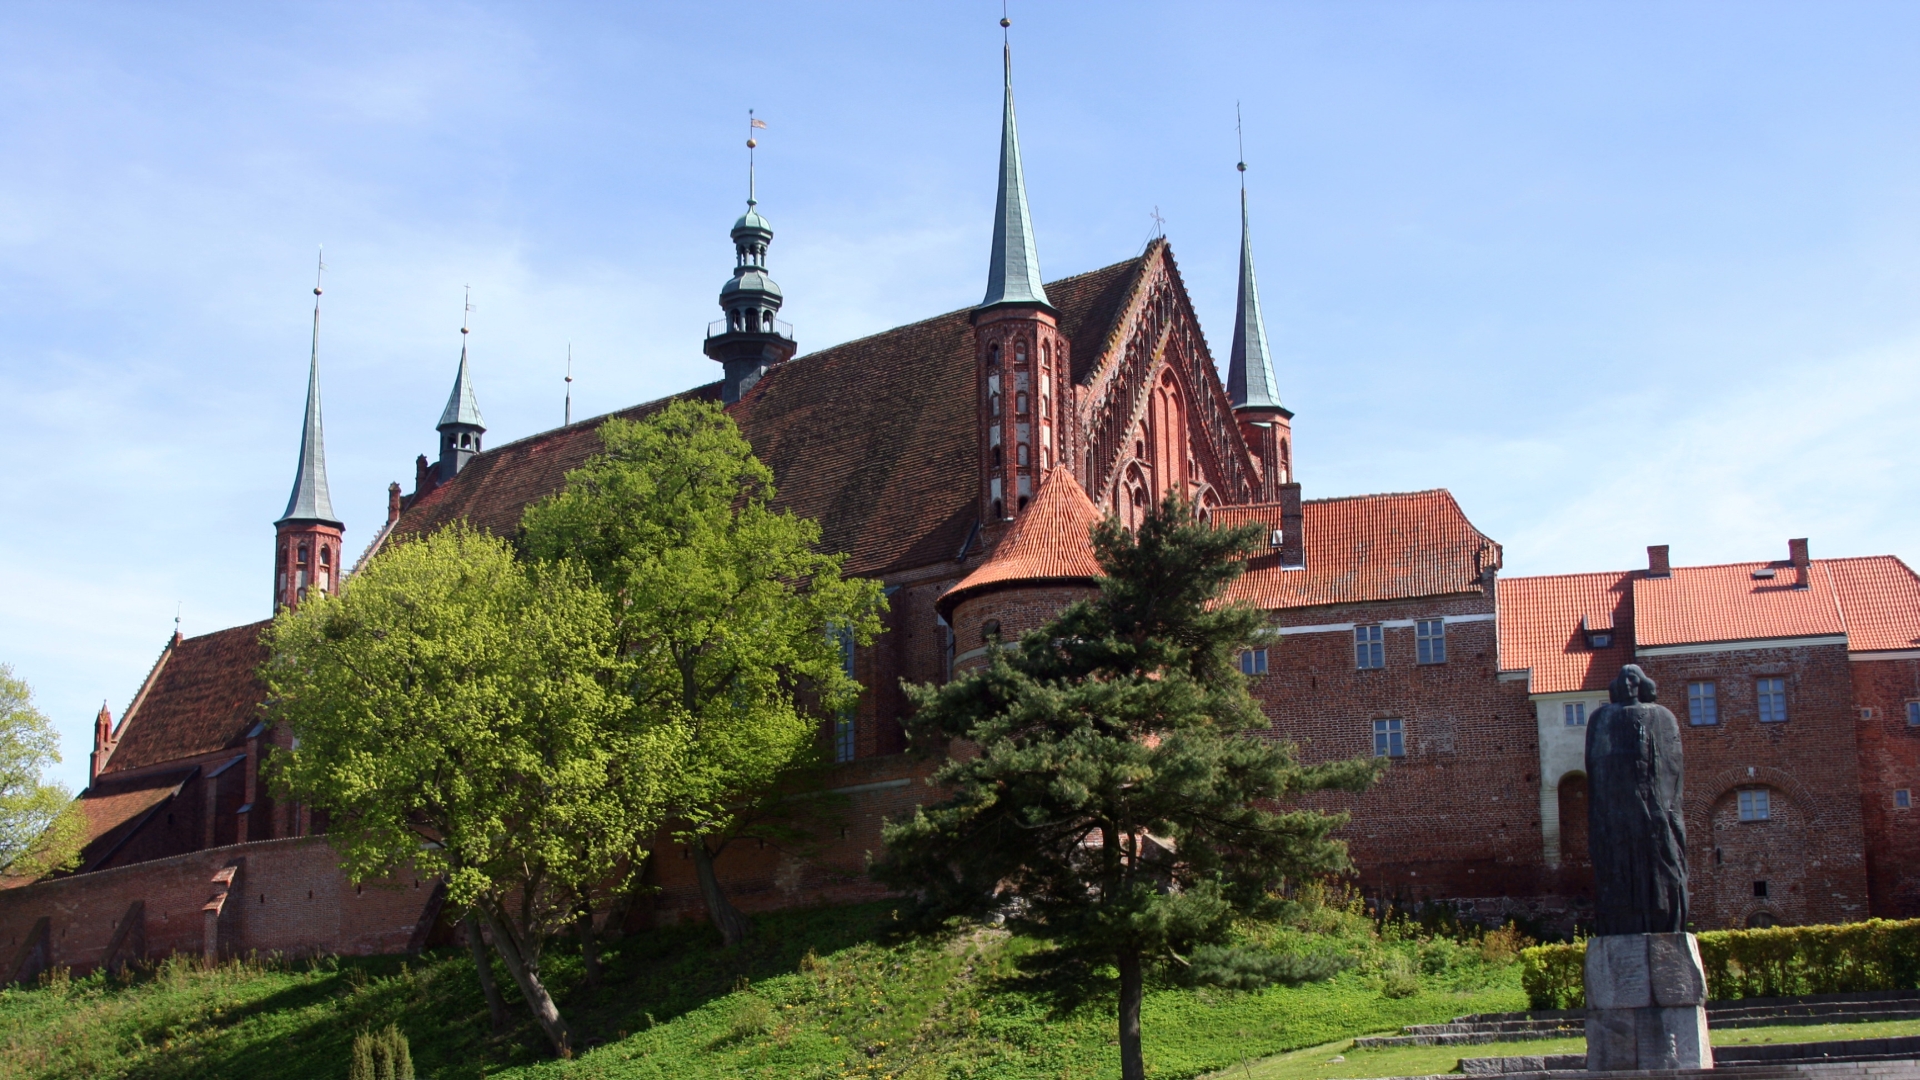 329716 descargar imagen religioso, catedral de frombork, catedrales: fondos de pantalla y protectores de pantalla gratis